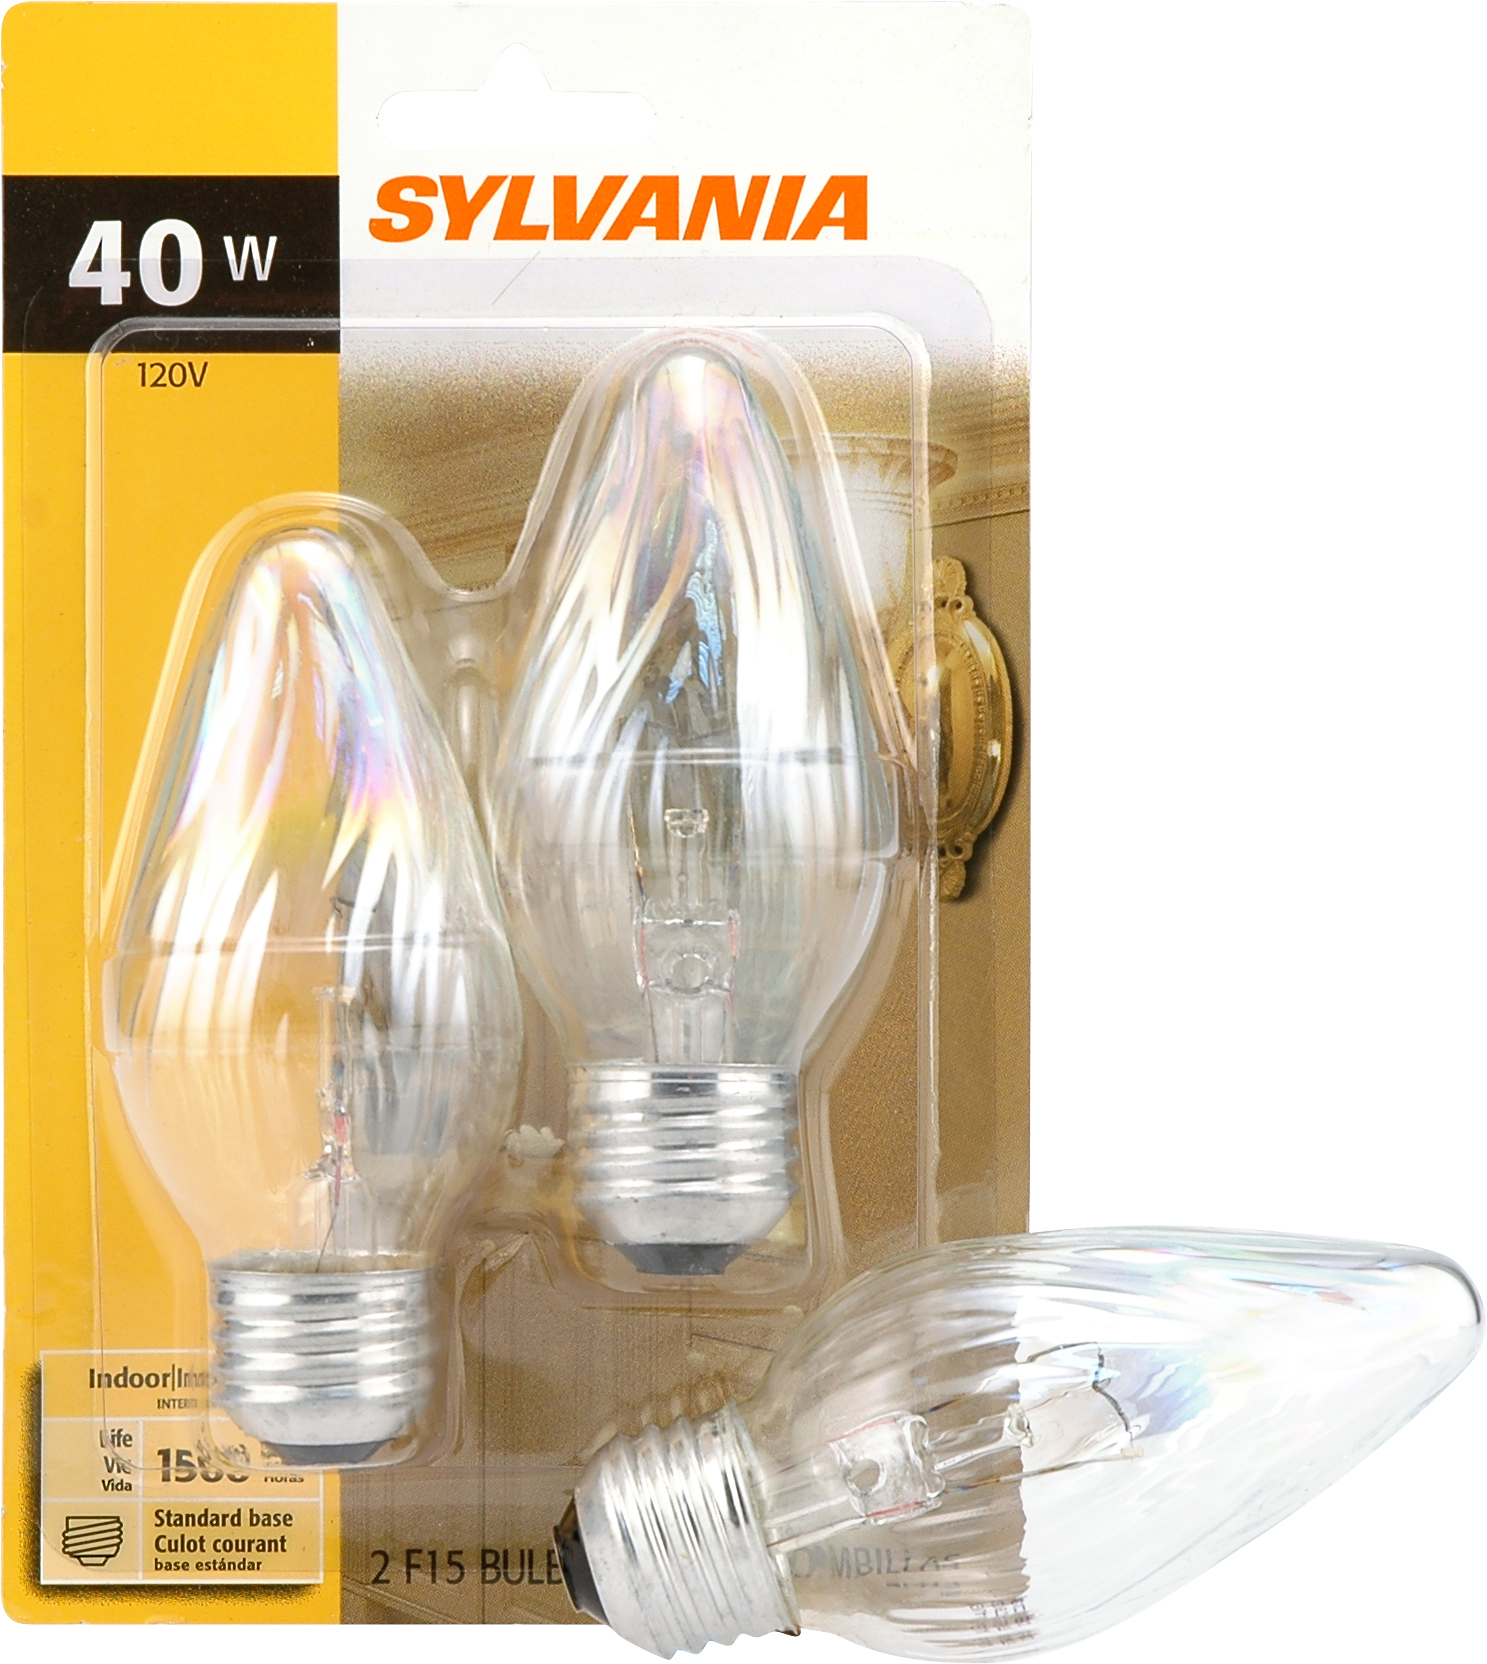 Sylvania Incandescent Flame Lamp F15Medium Base 120V Light Bulb 40W 2 Pack Home Improvement